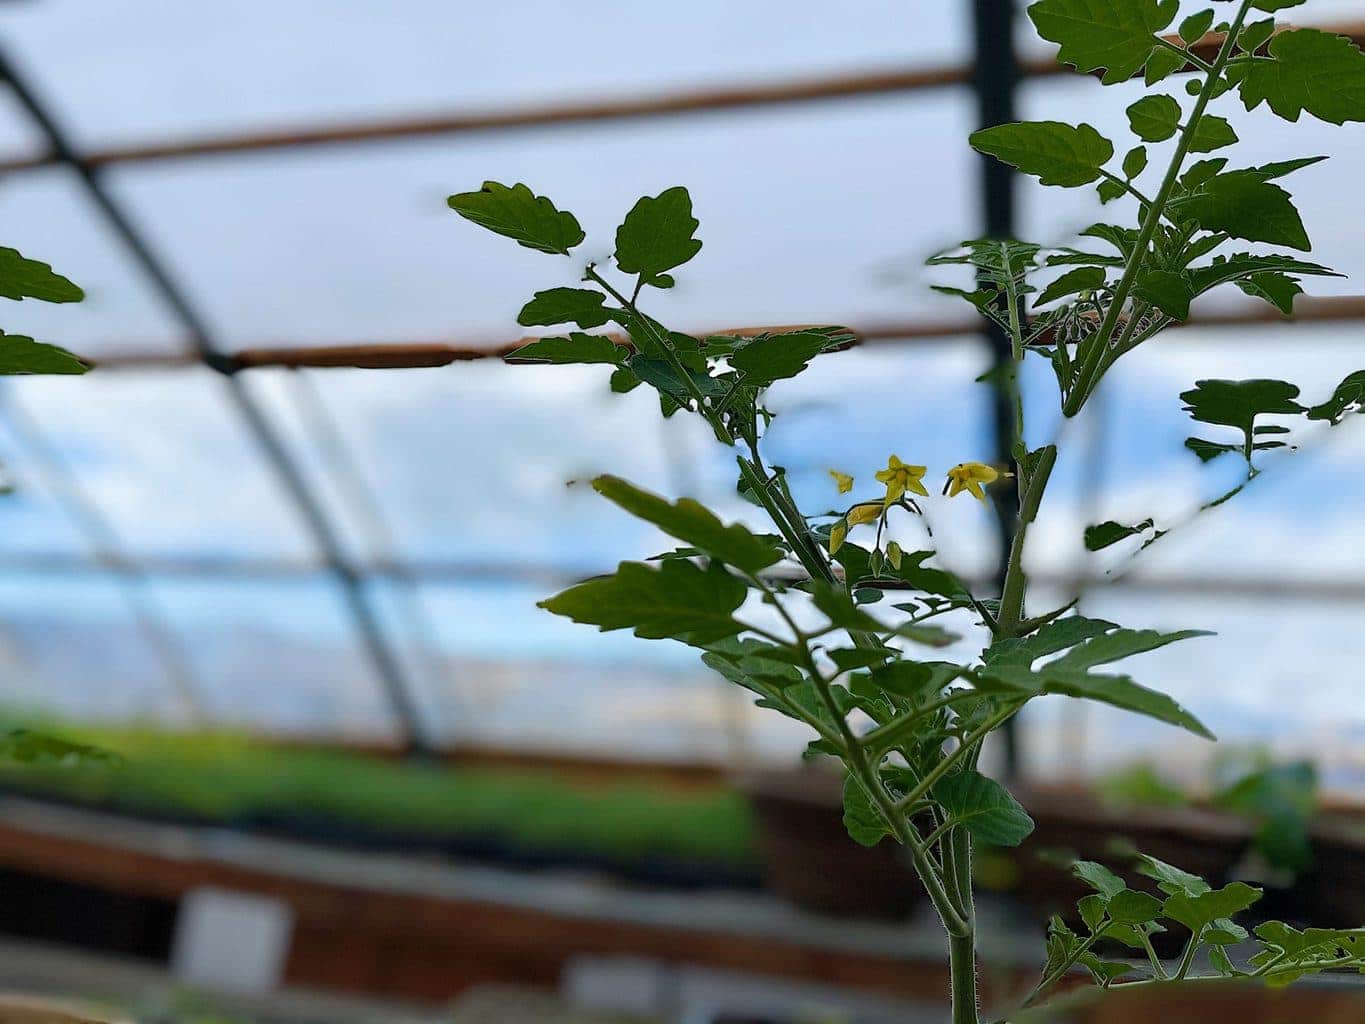 Greenhouse tomato plant